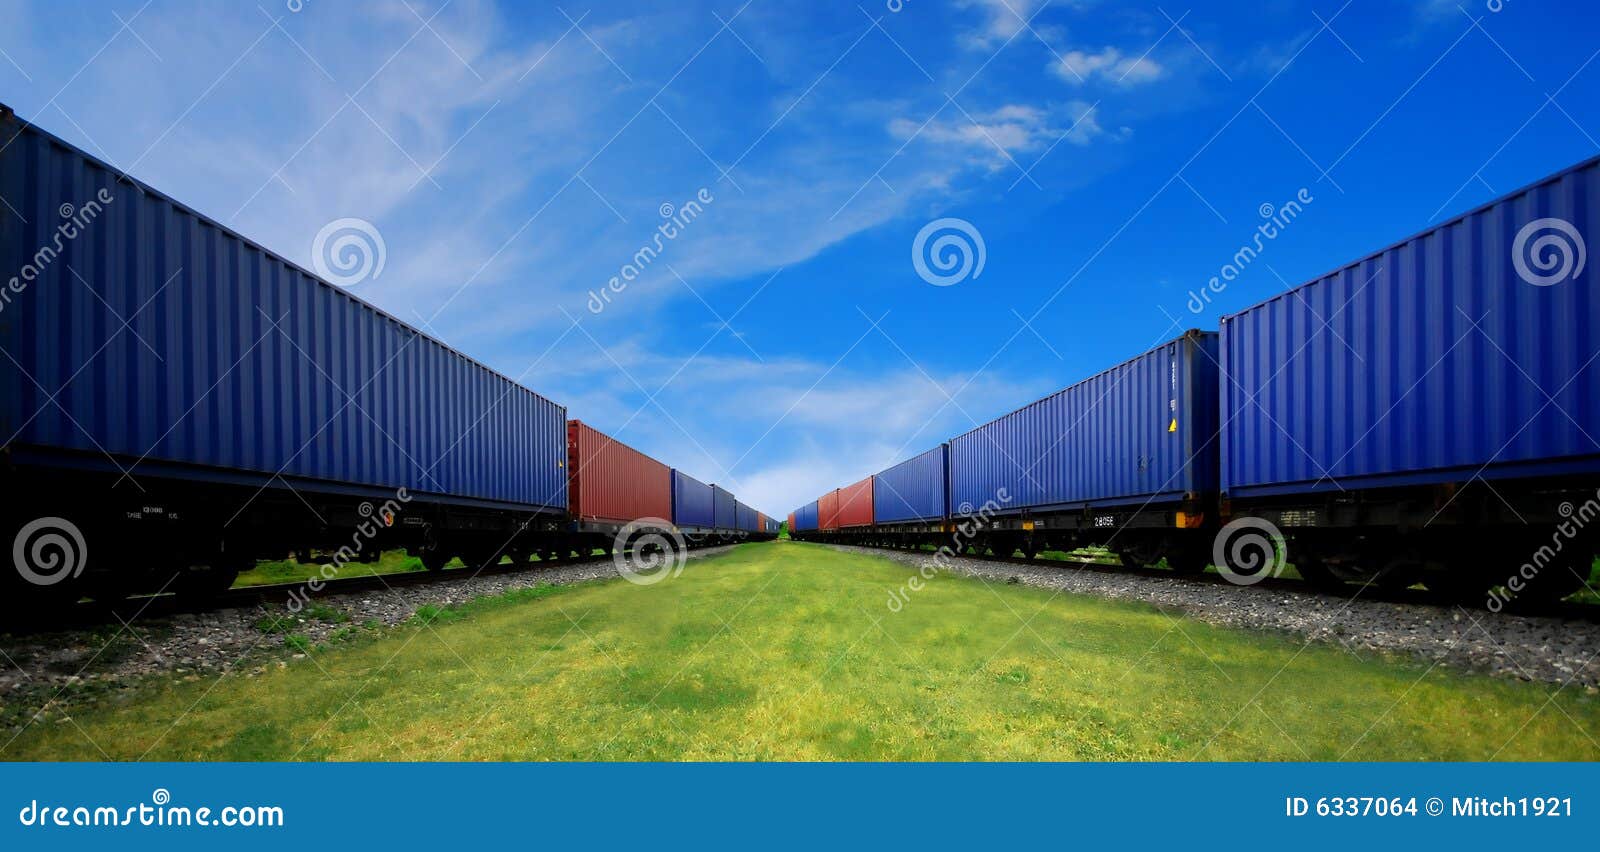 cargo train